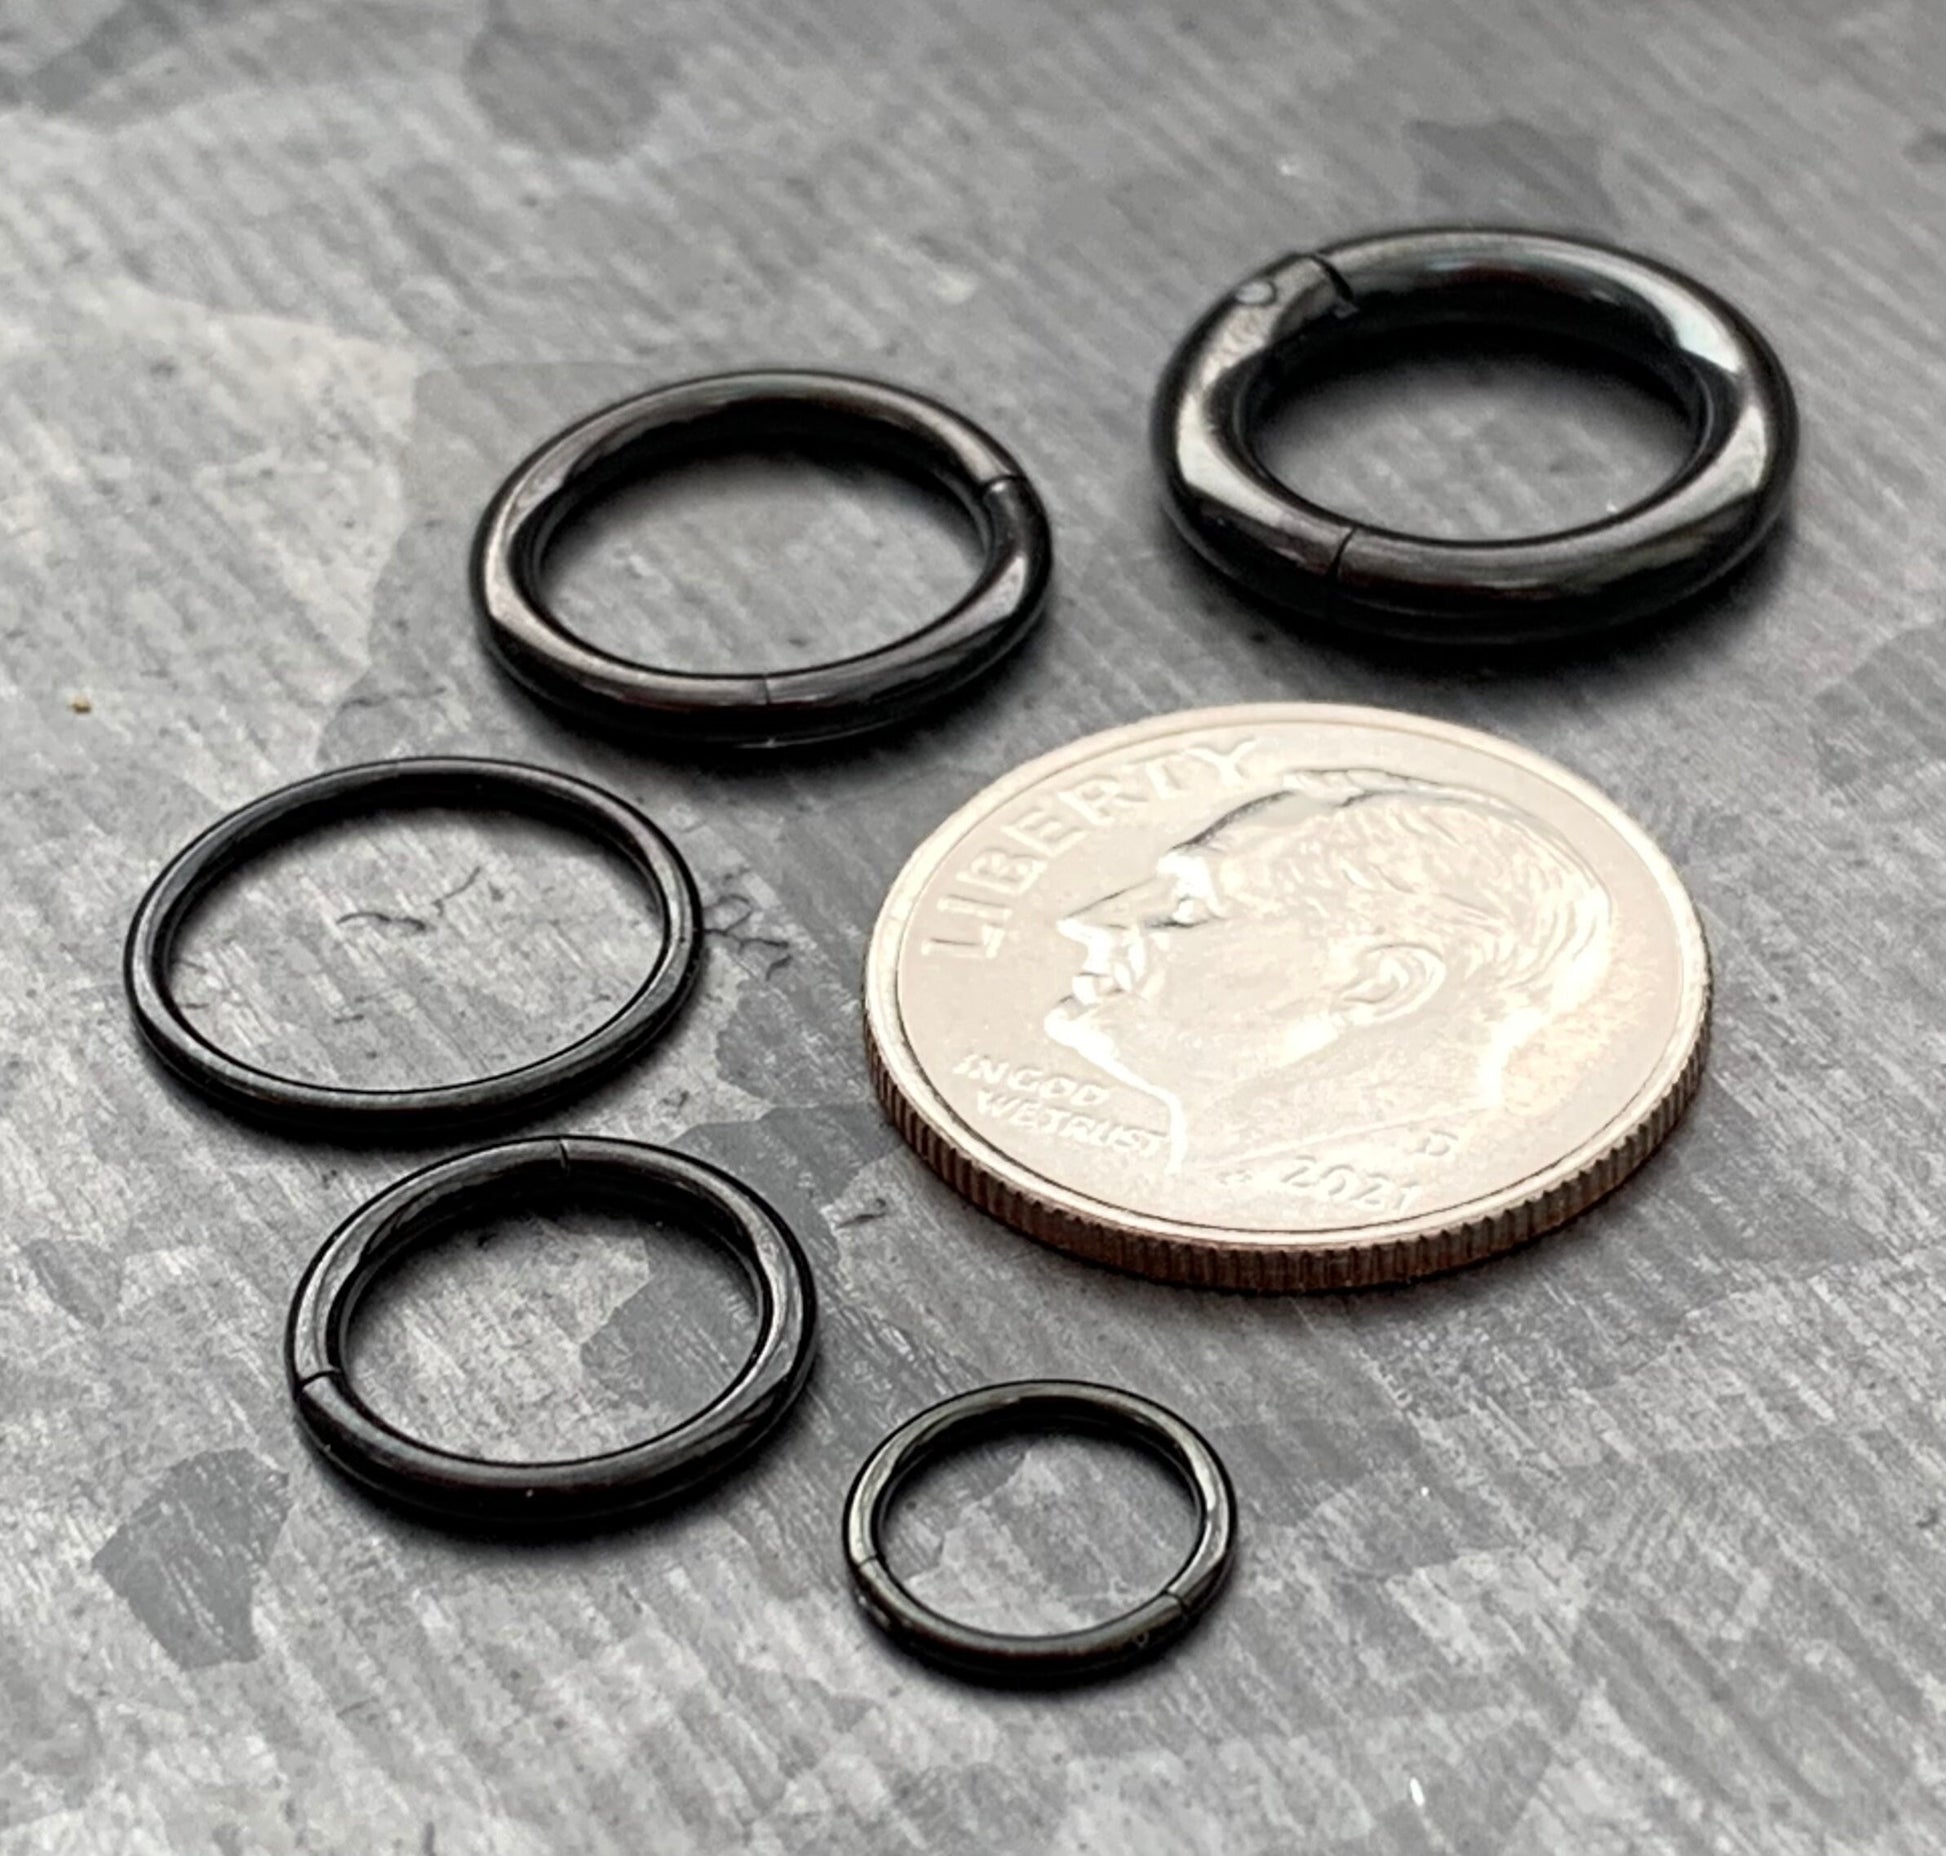 1 Piece of Brilliant Black Hinged Segment Septum Ring/Hoop - Gauges 10g, 12g, 14g, 16g, 18g & 20g available!